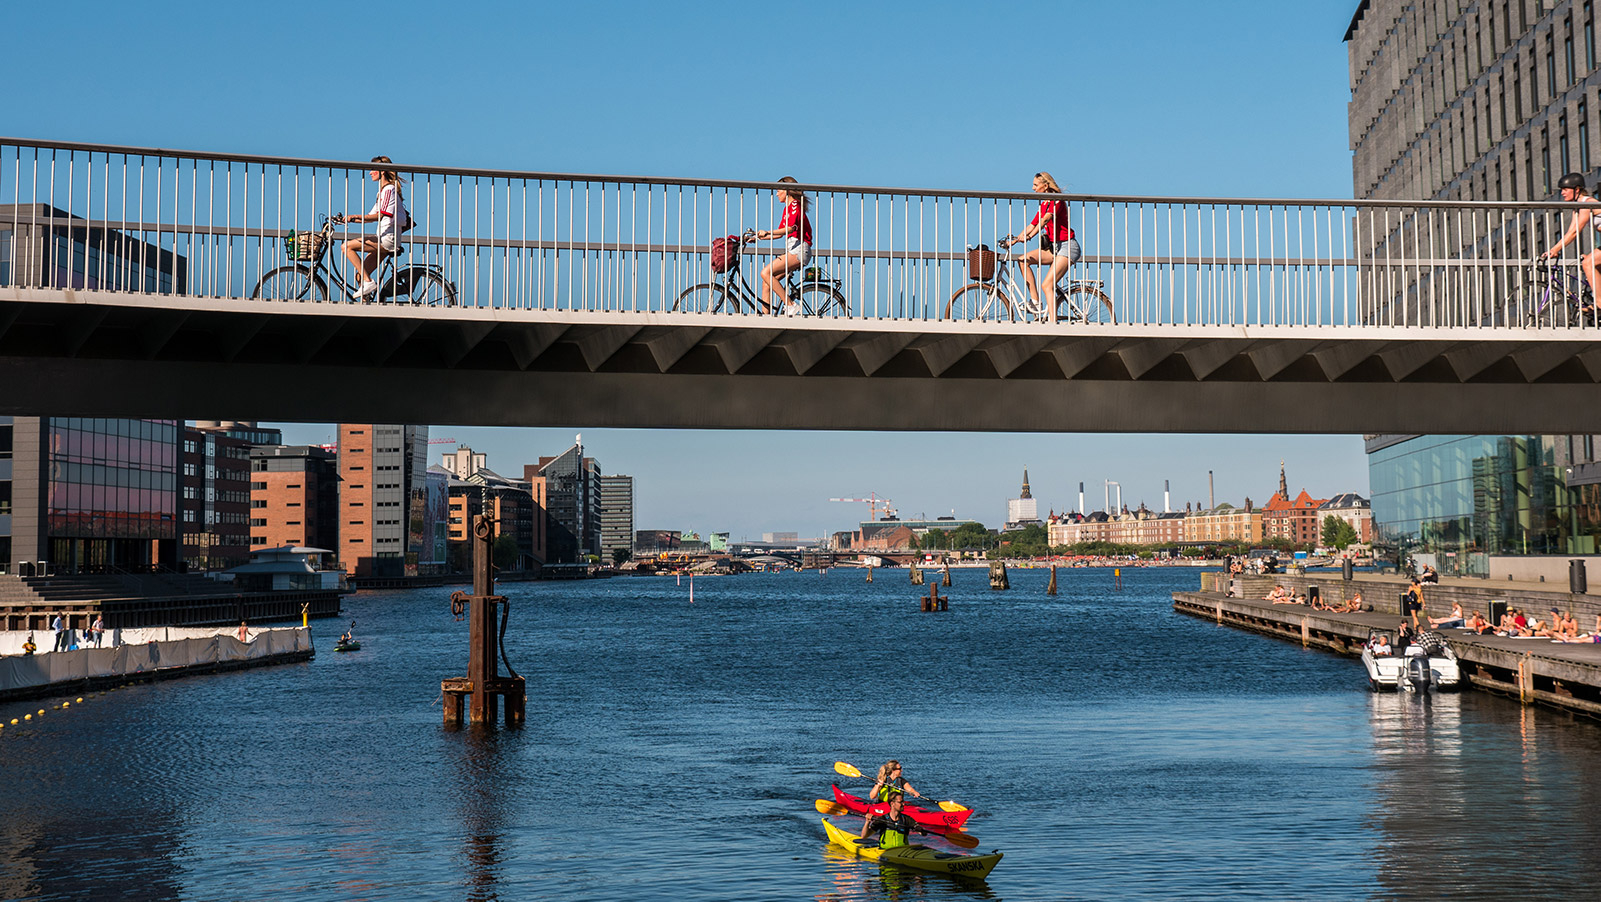 Copenhagen bicycle bridge